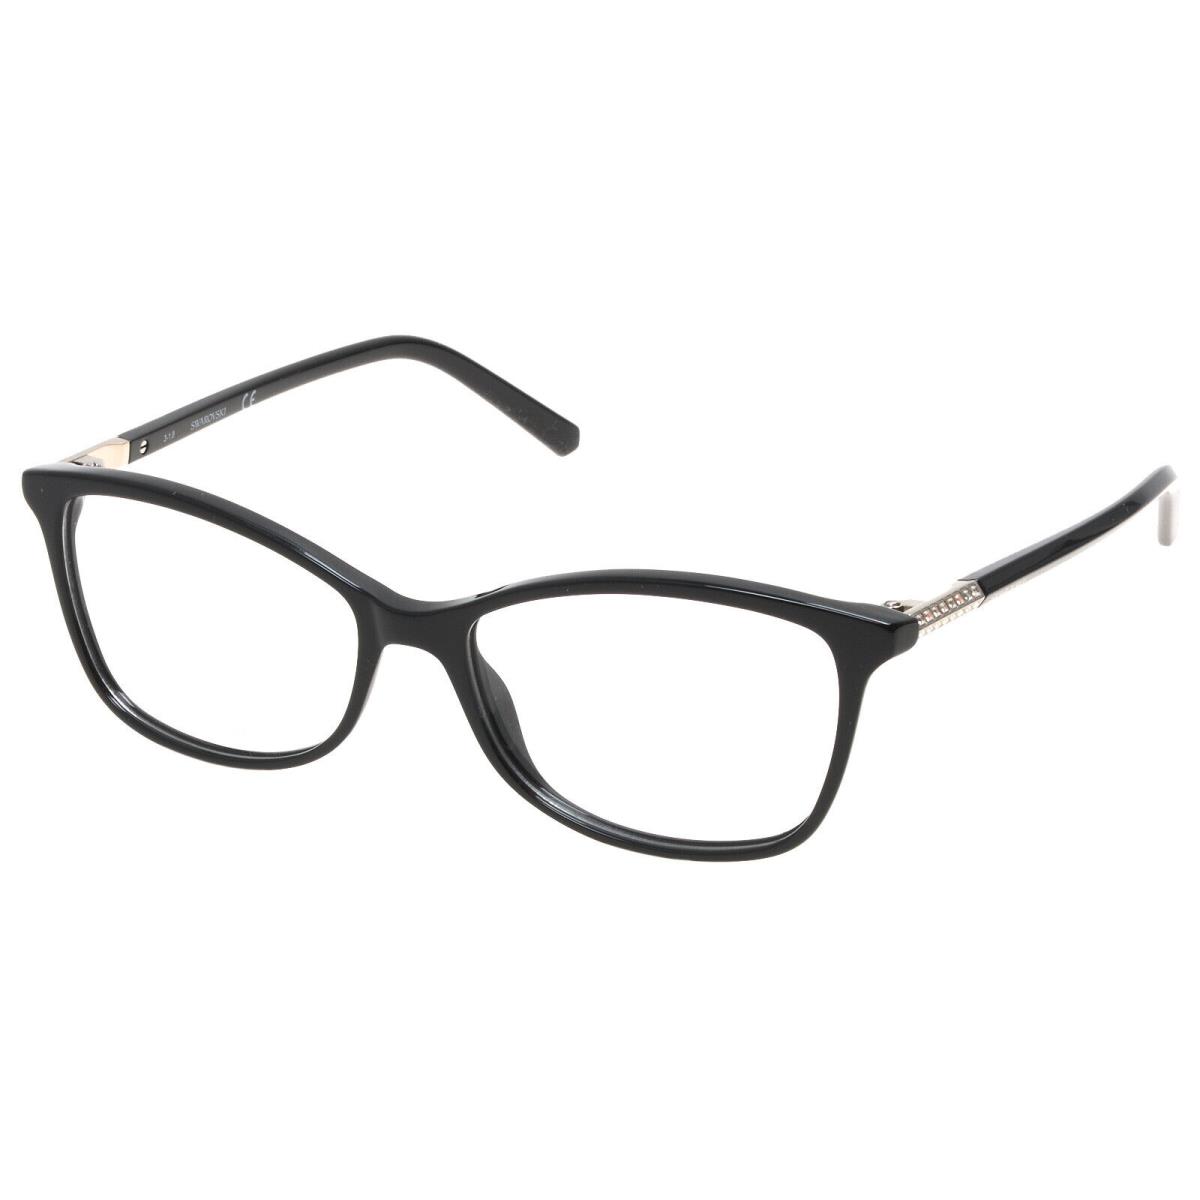 Swarovski SW5239 001 Black Plastic Cat Eye Eyeglasses Frame 53-15-140 SK5239